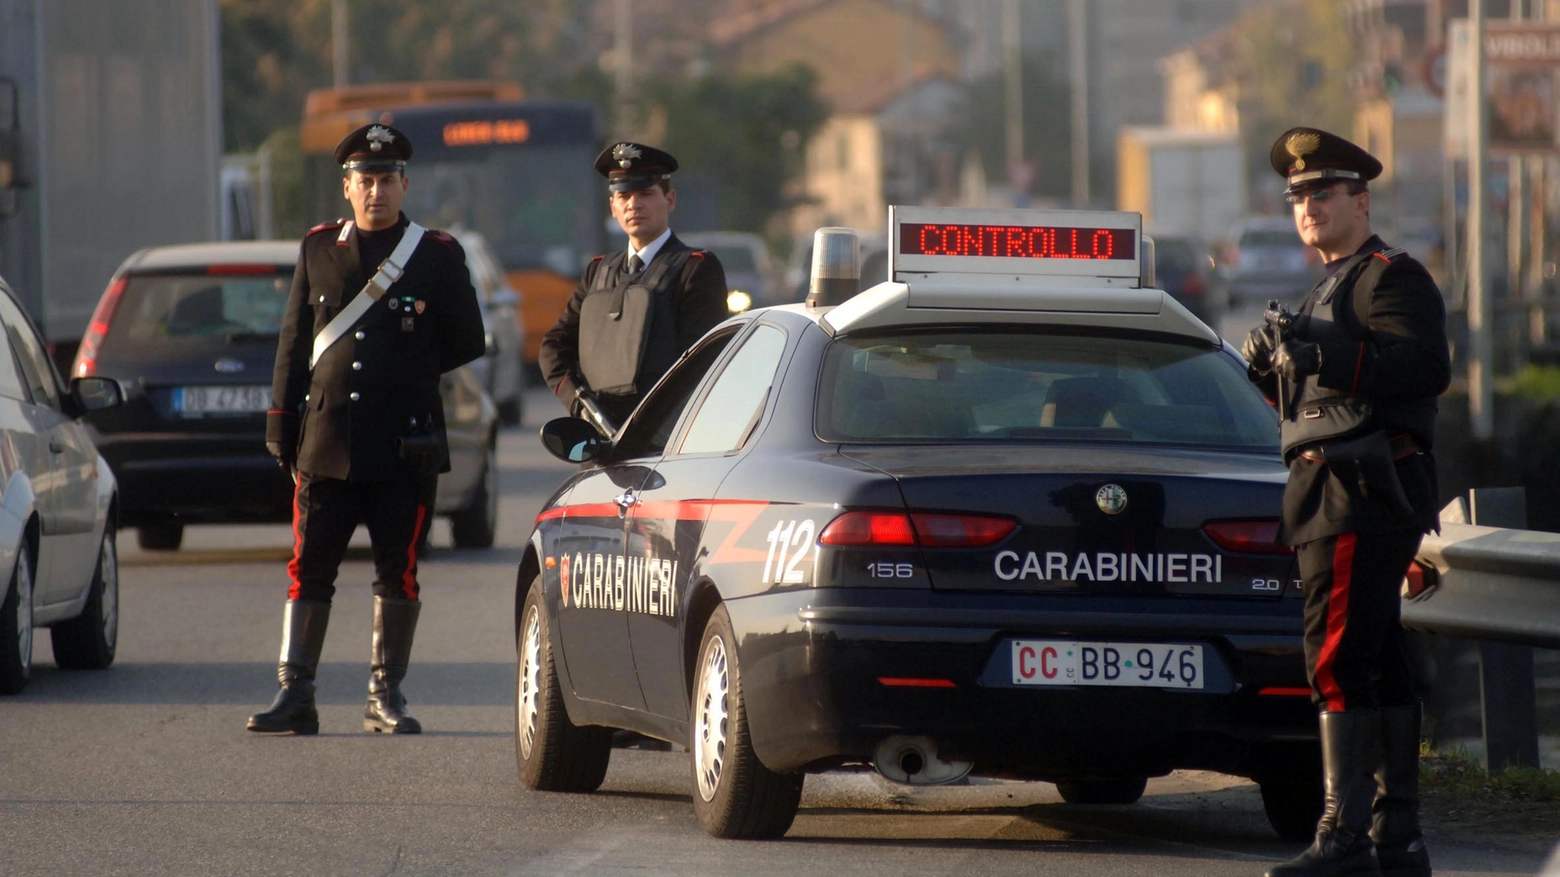 Le indagini sono affidate ai carabiniero